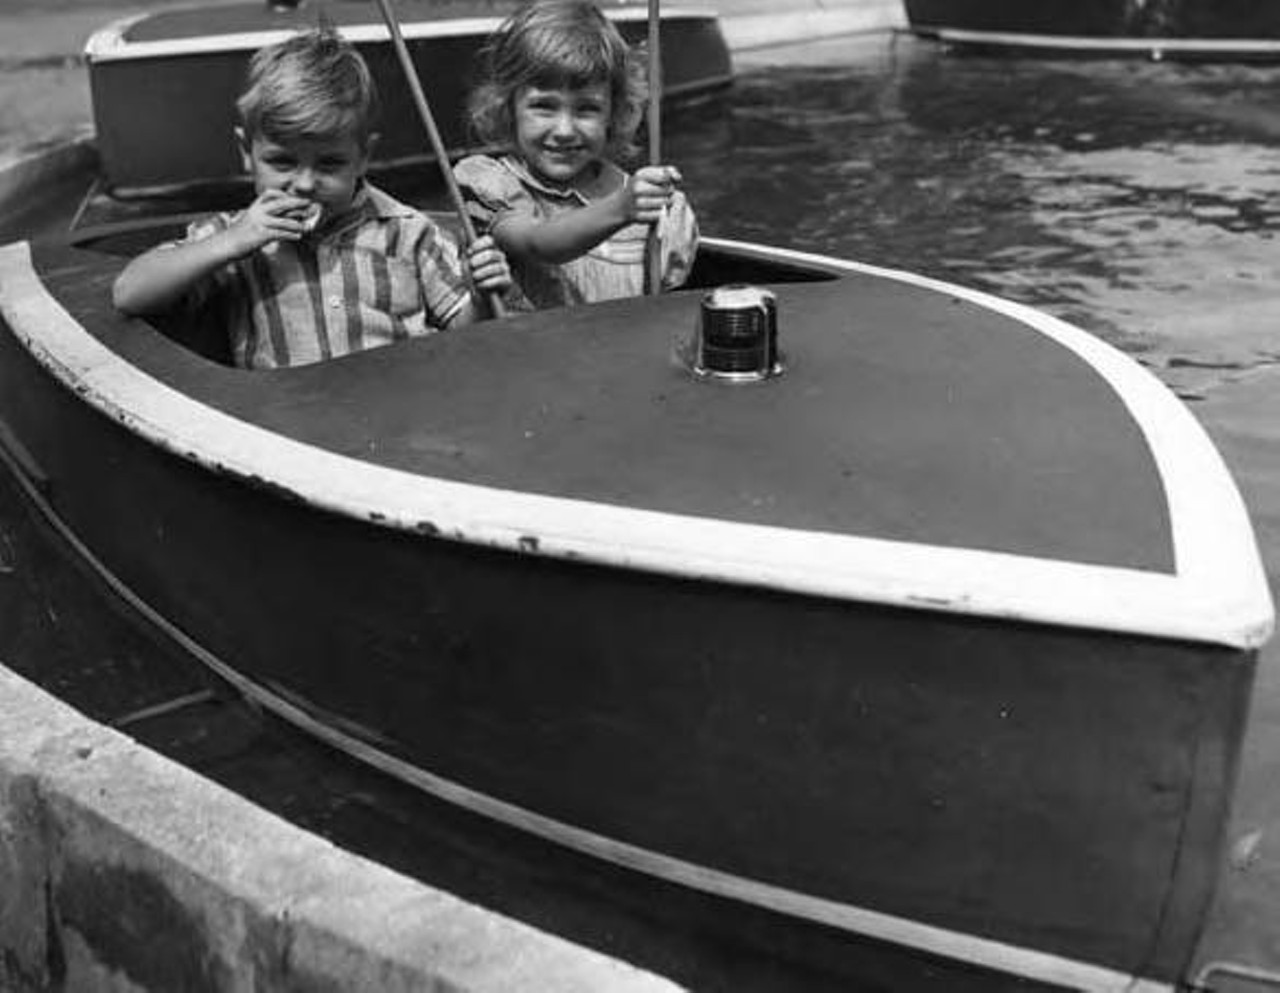  Children on Boat Ride, 1949 